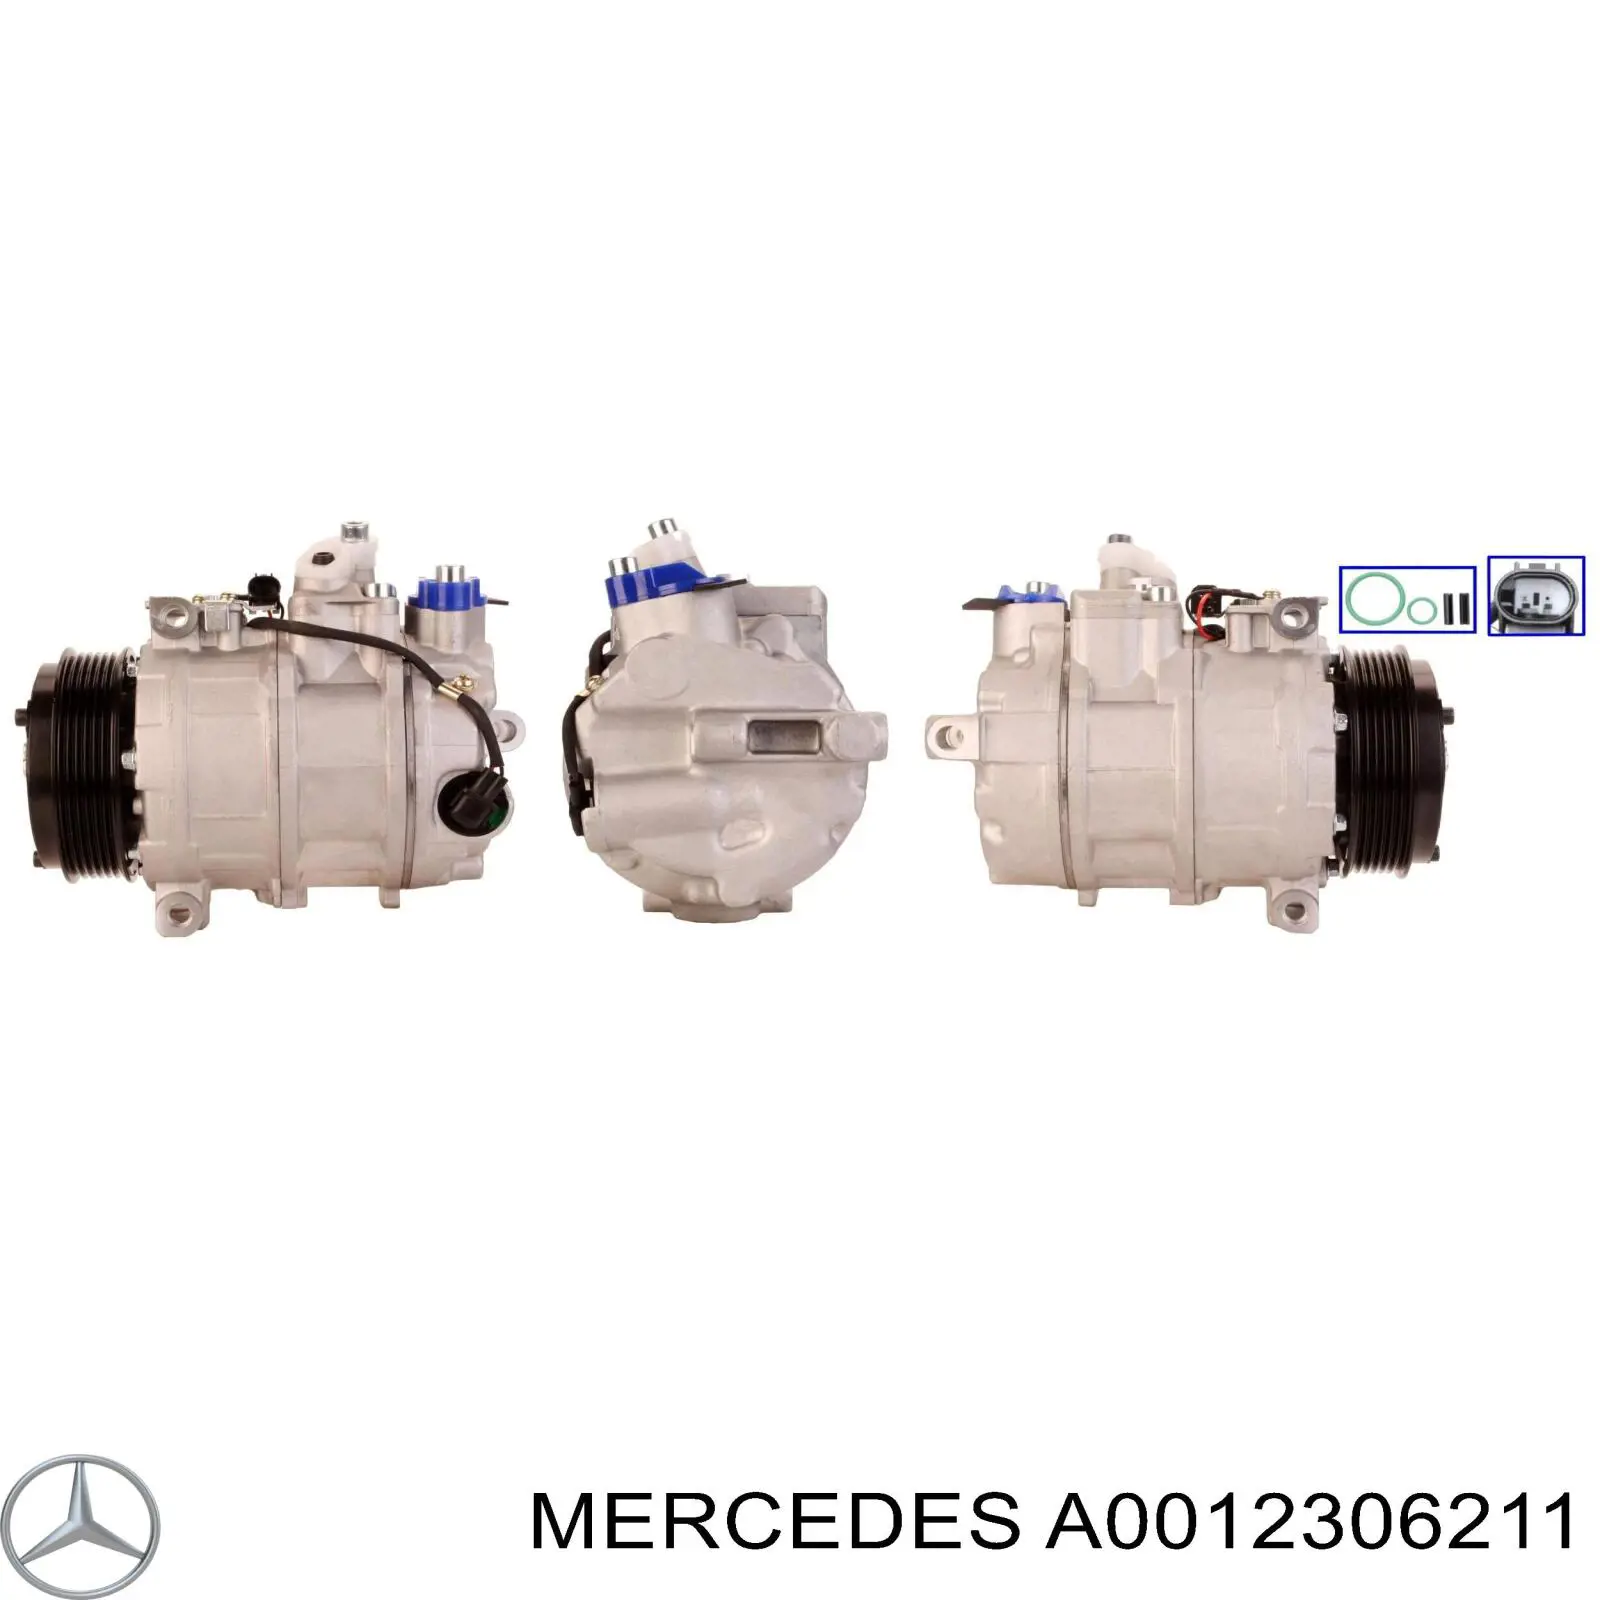 A0012306211 Mercedes compresor de aire acondicionado